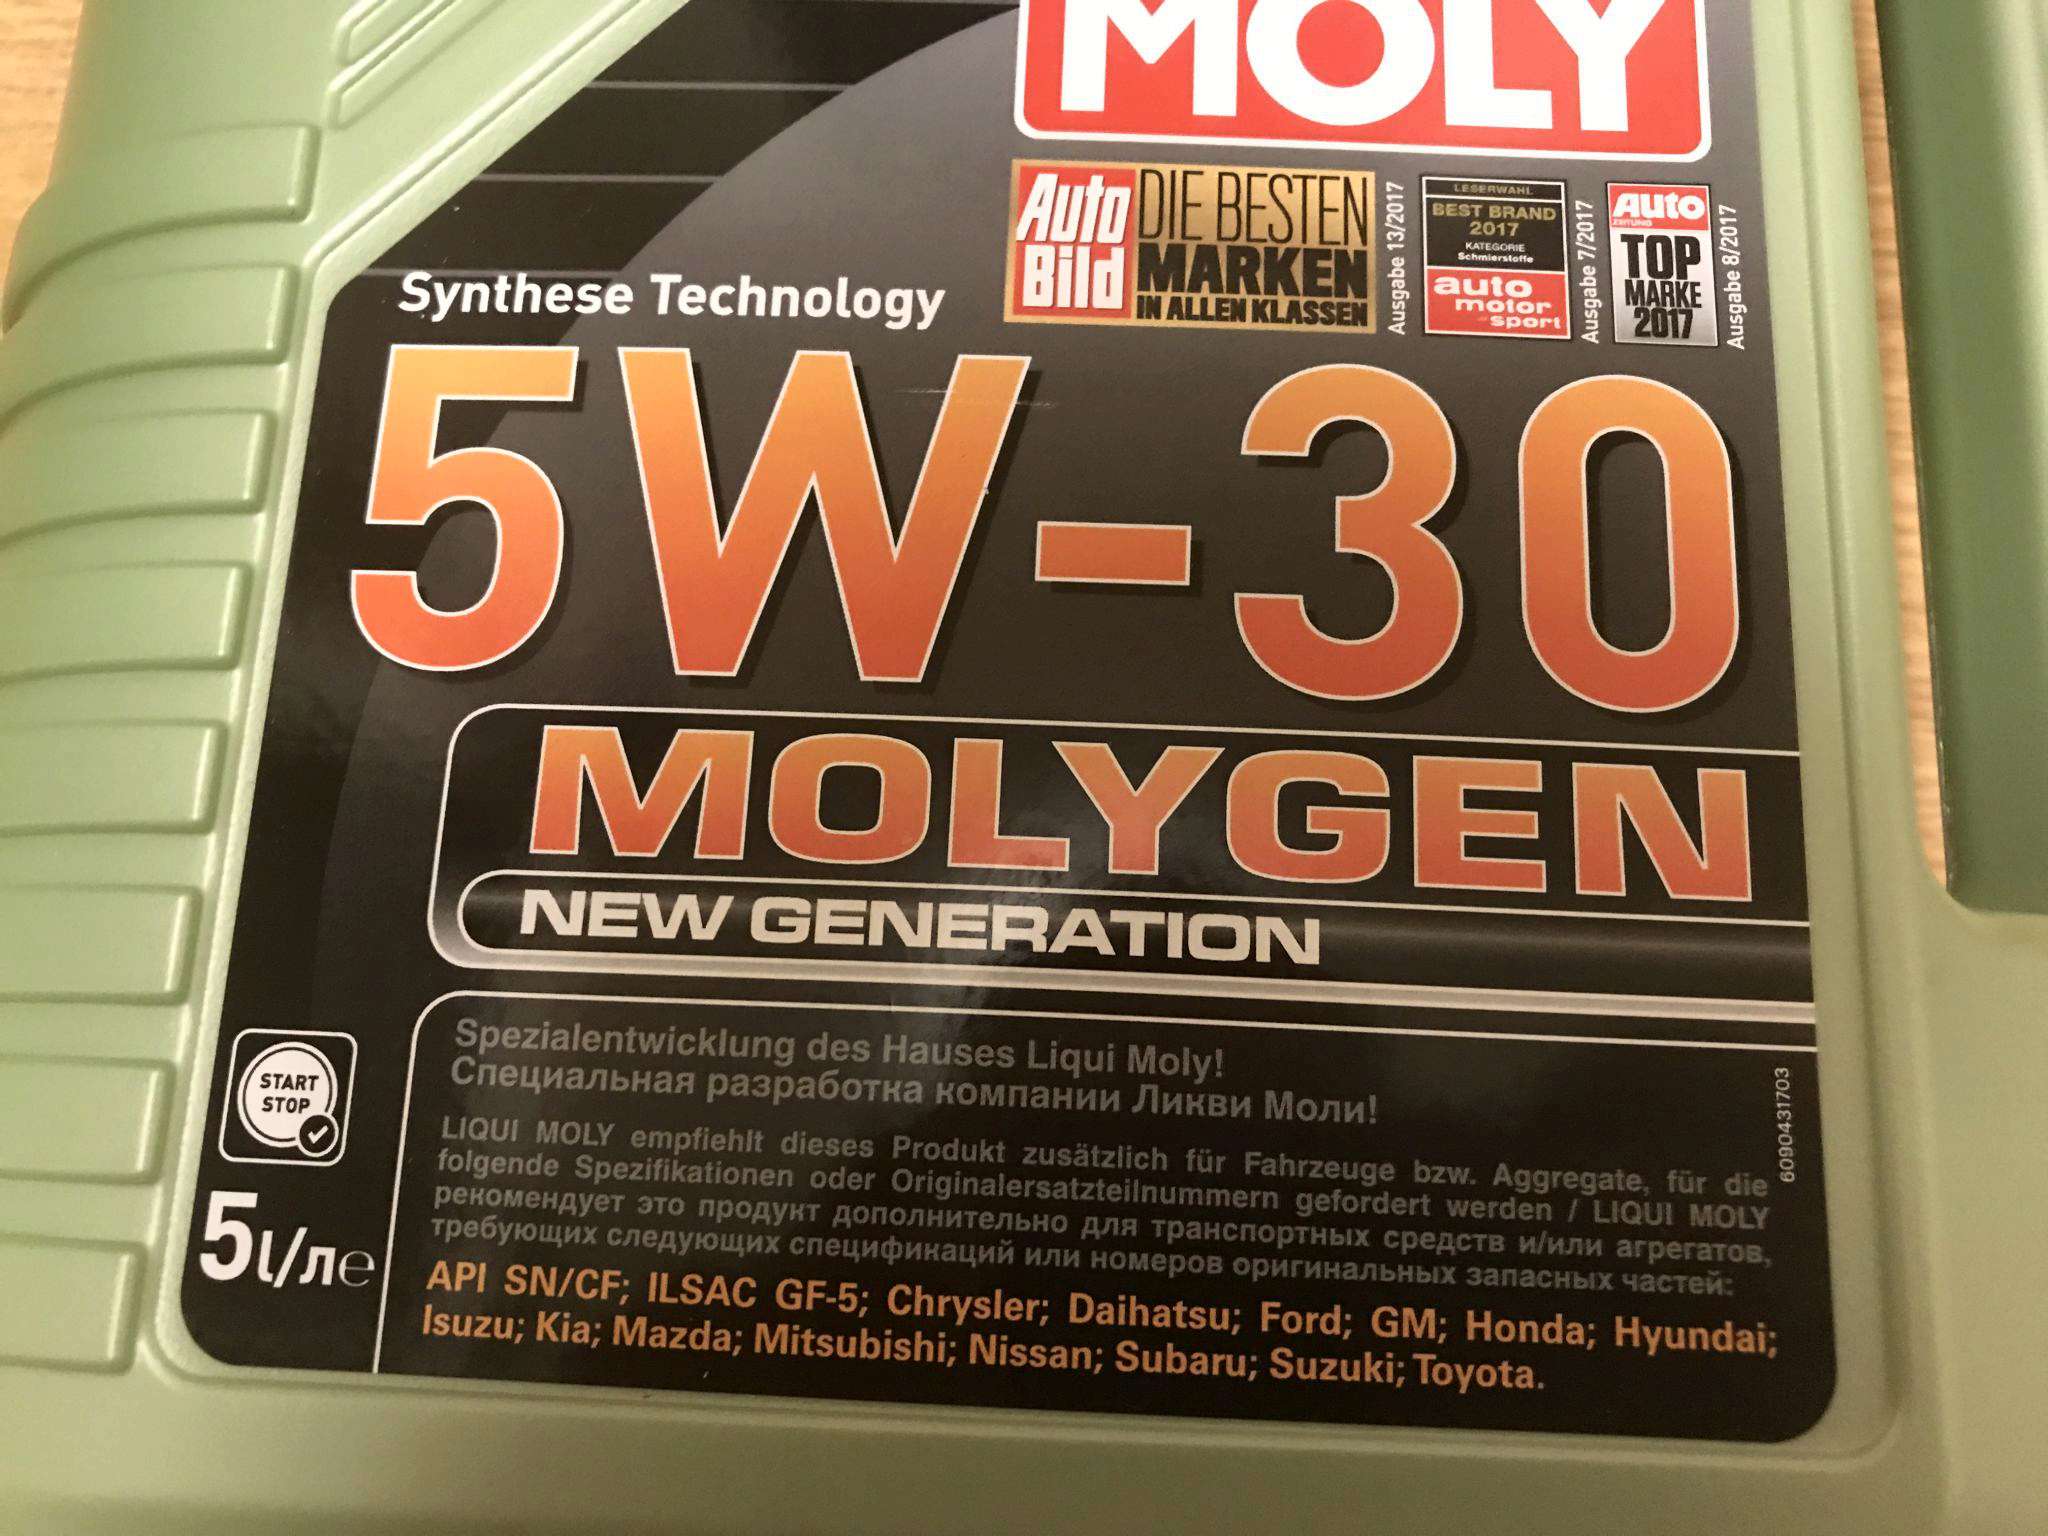 Ликви моли молиген 5w30 купить. Масло Ликви моли 5w30 молиген. Масло моторное Liqui Moly Molygen New Generation 5w30. Масло моторное Liqui Moly Molygen 5w-30. Liqui Moly 5 30 молиген.